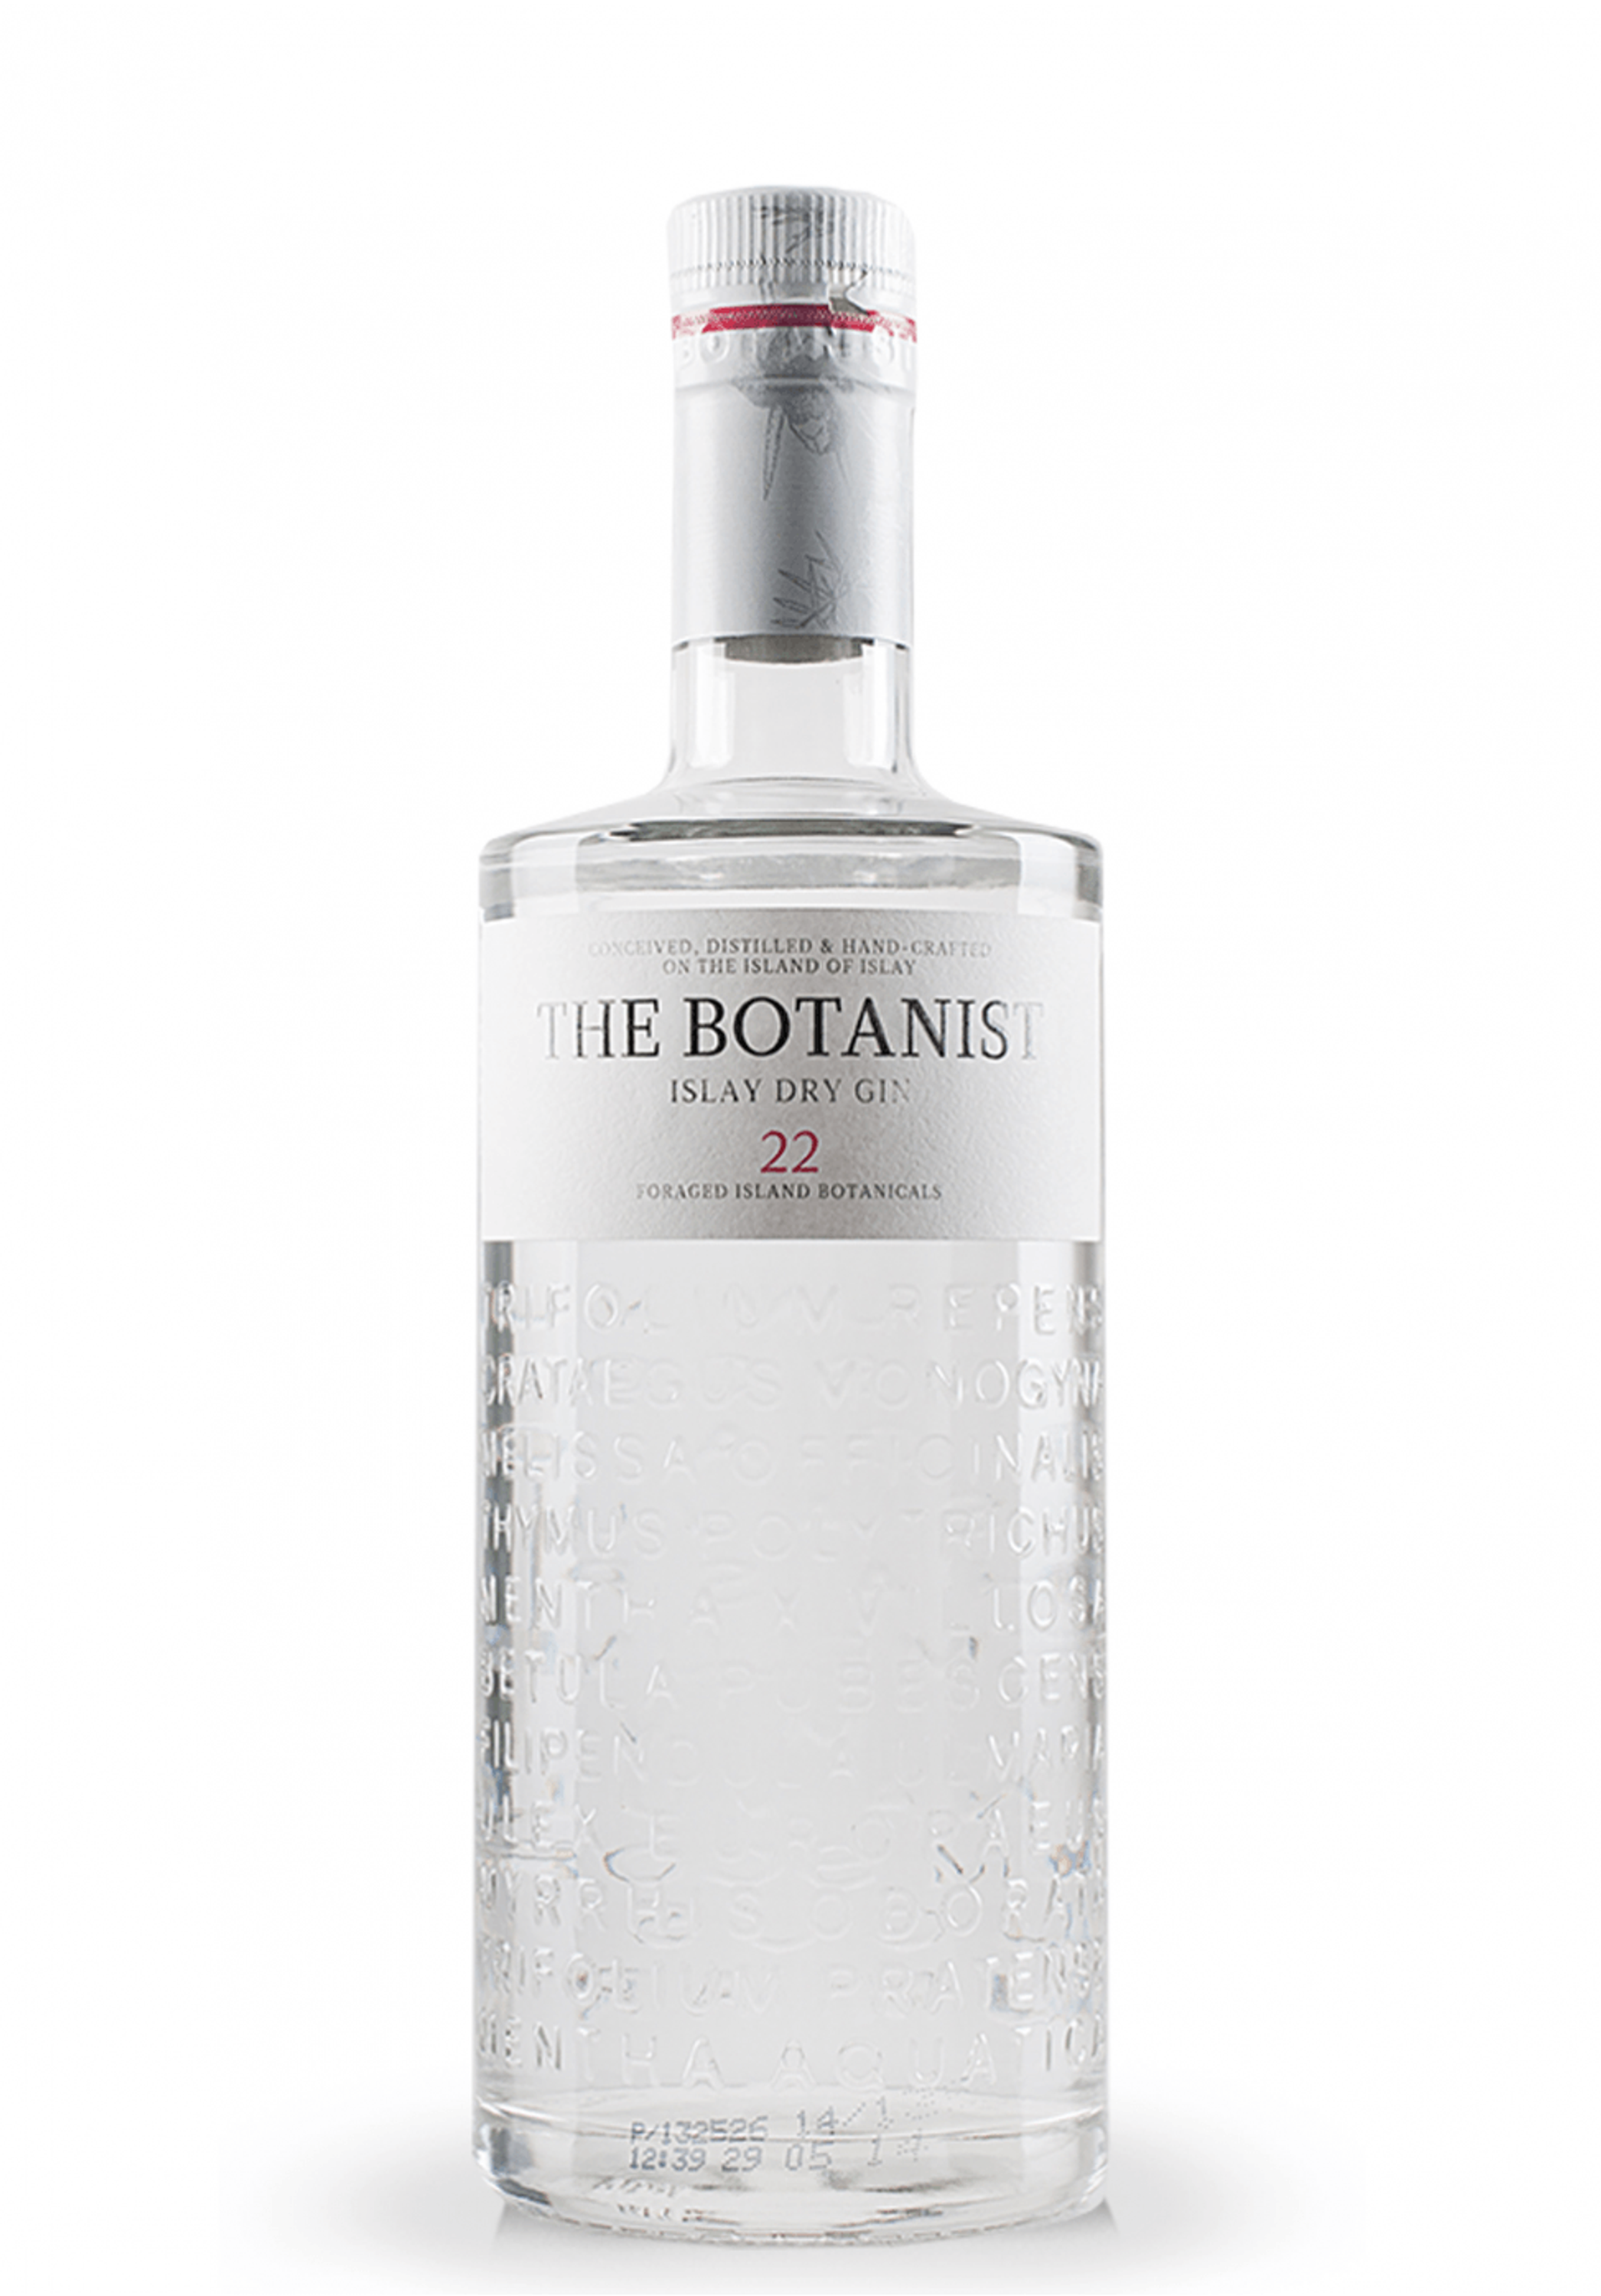 The Botanist Islay Dry Gin 0.7l, alc. 46% ABV Dry Gin Scotland